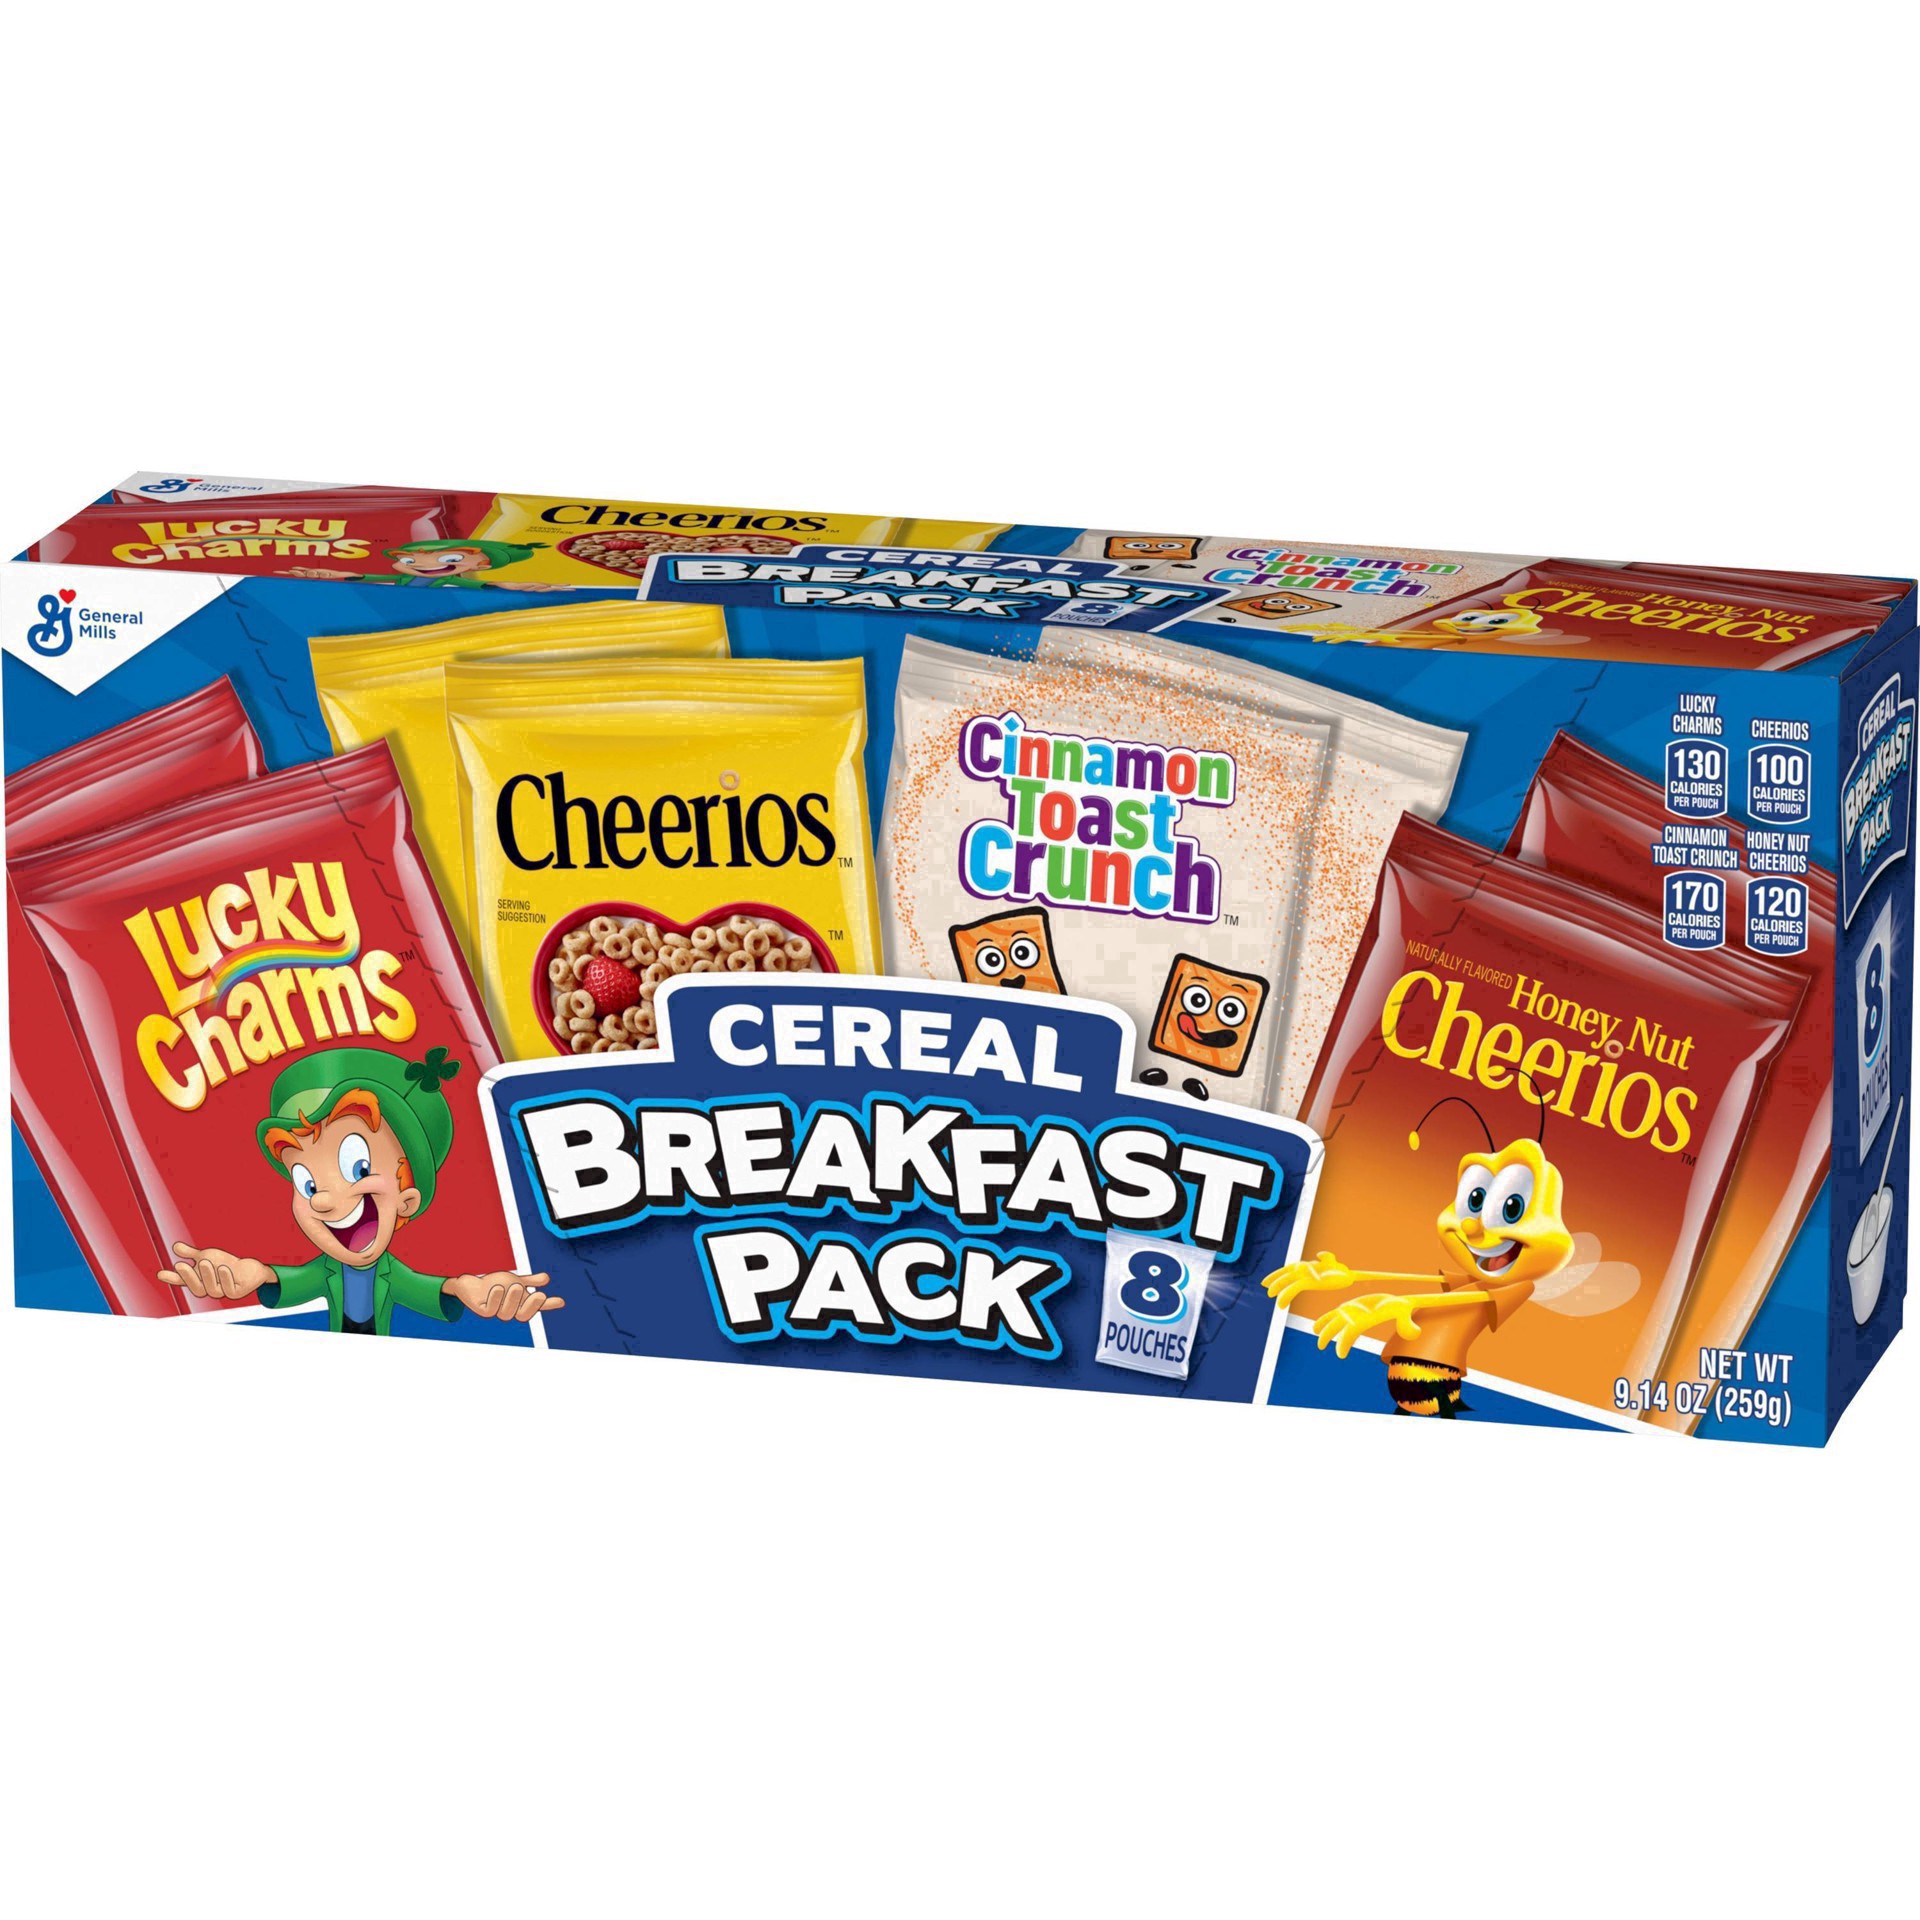 slide 133 of 141, General Mills Breakfast Pack Cereal, 8 ct